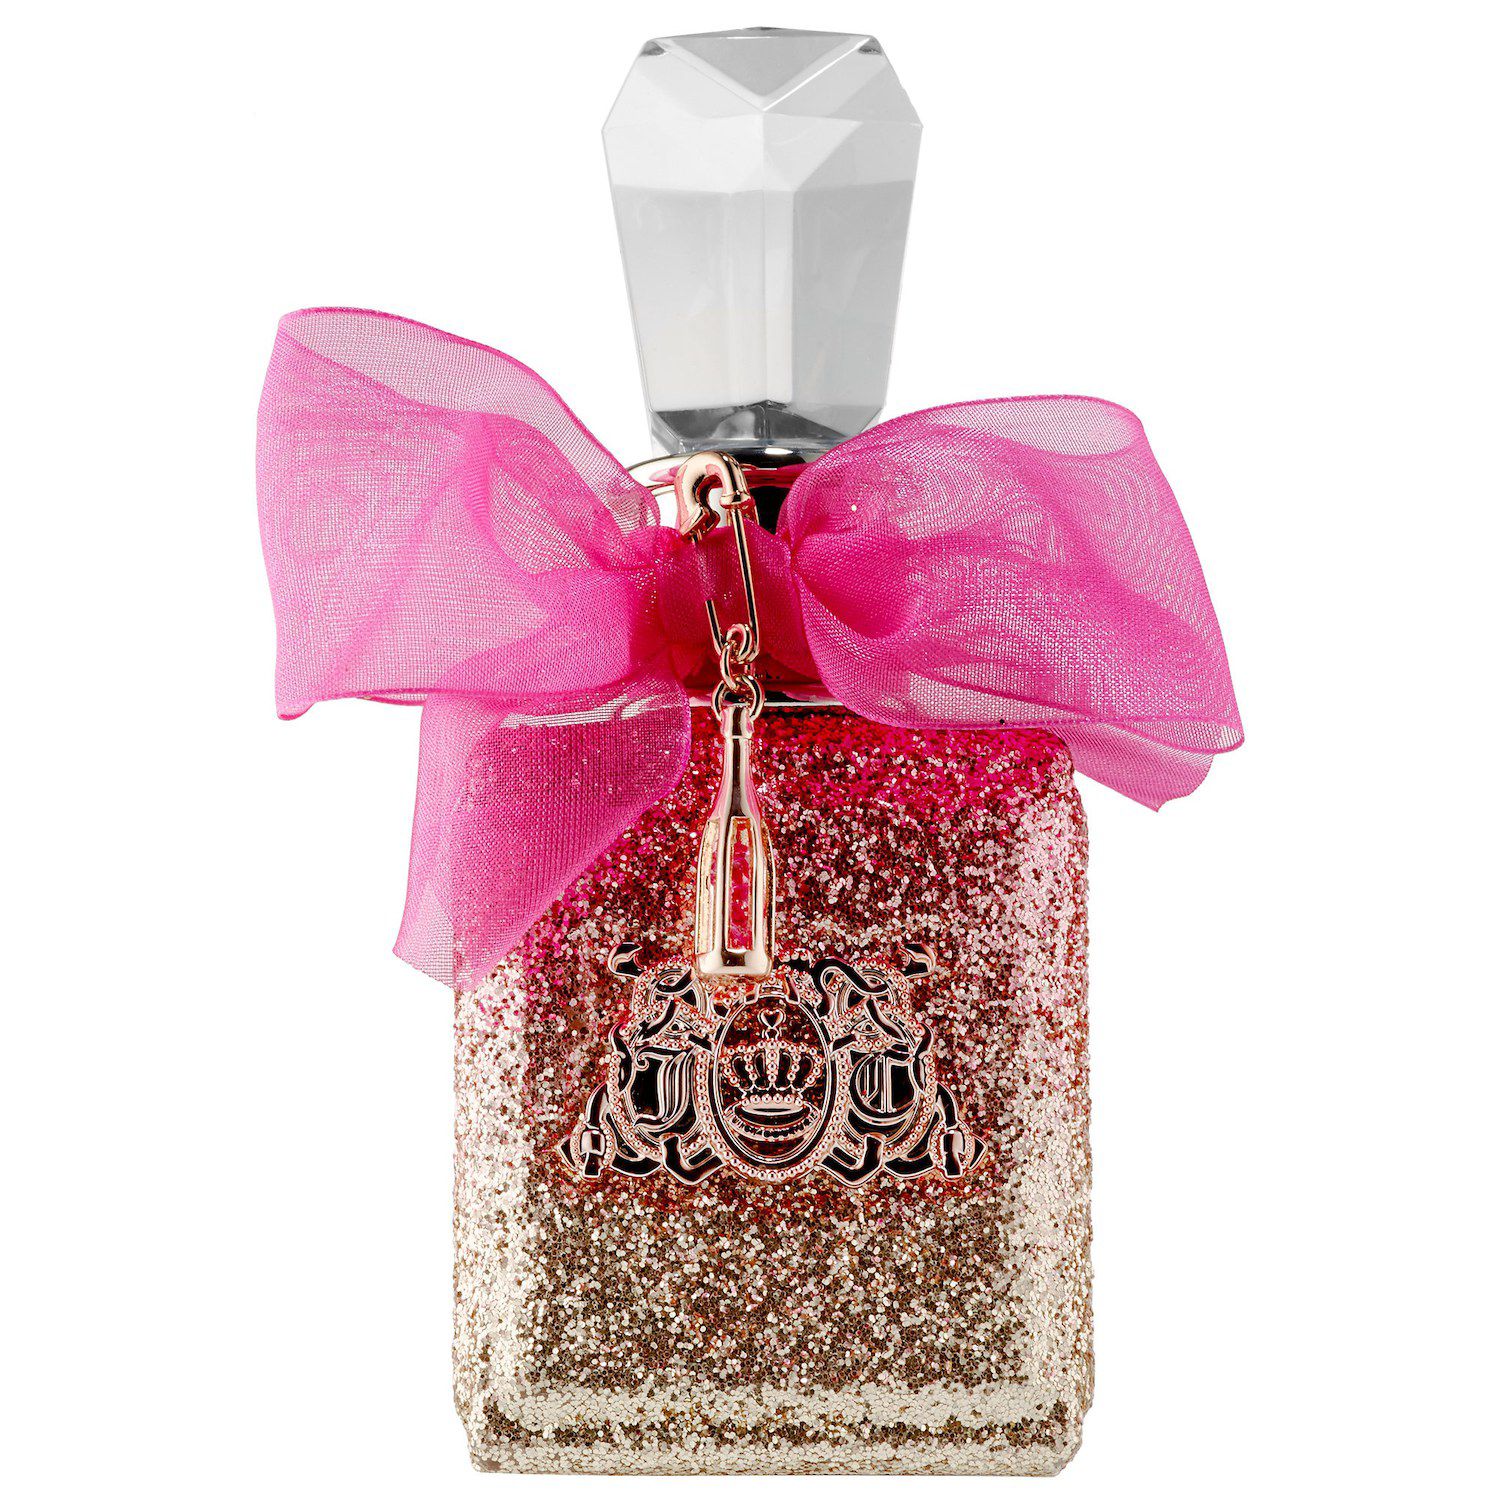 Lansinoh Hpa Lanolin Ultra Pure 40ml, Luxury Perfume - Niche Perfume Shop